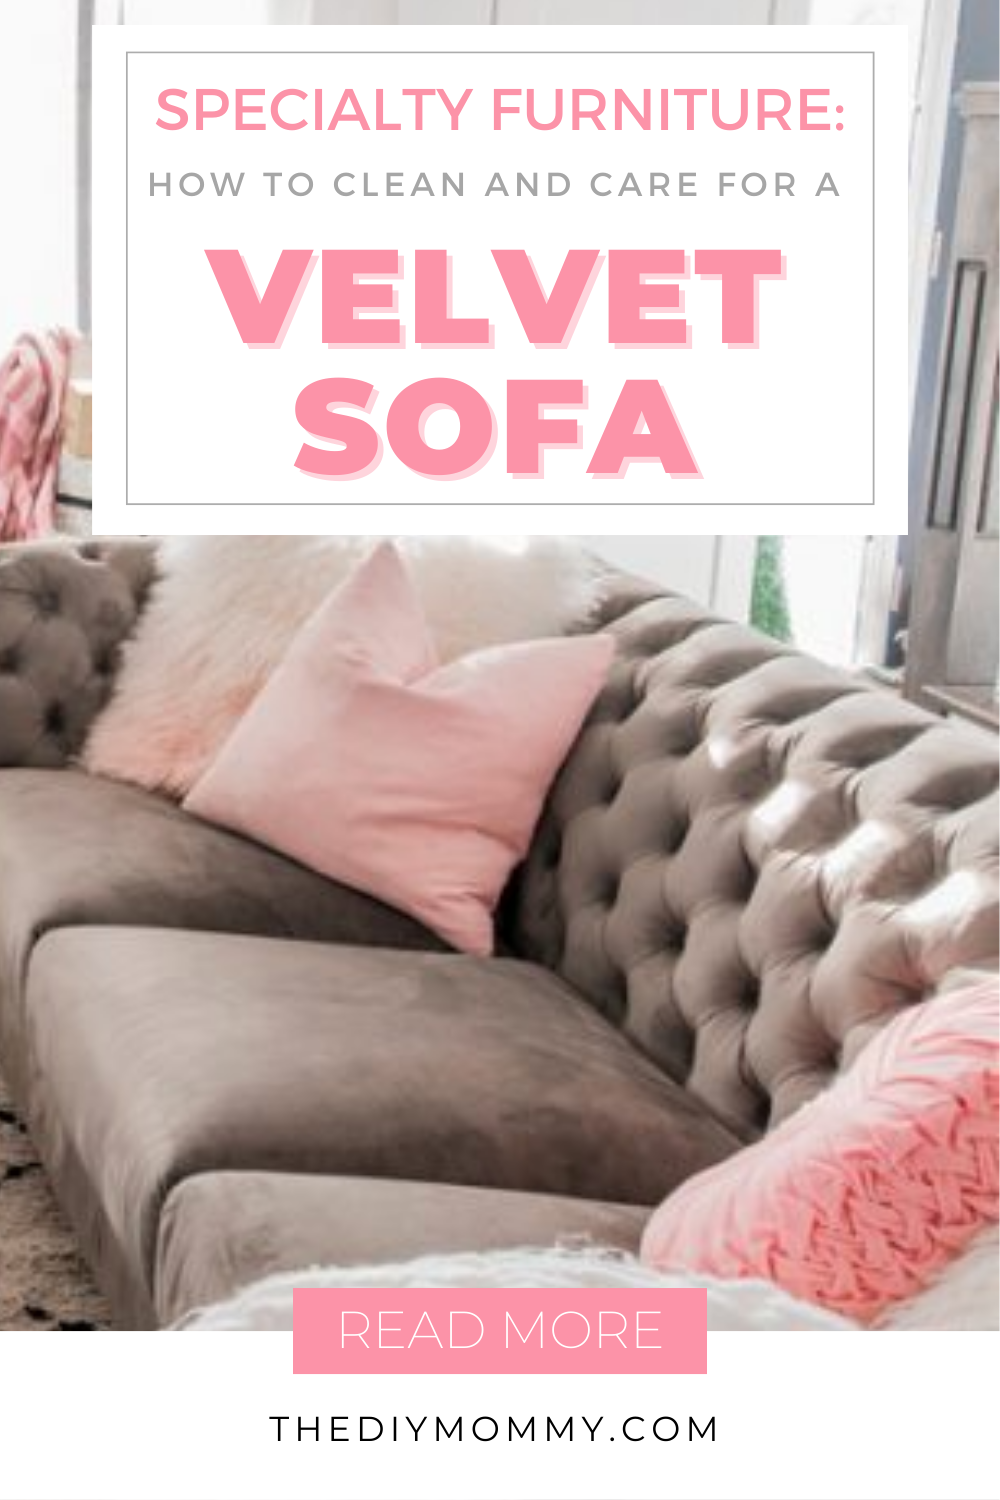 Clean and maintain a velvet sofa